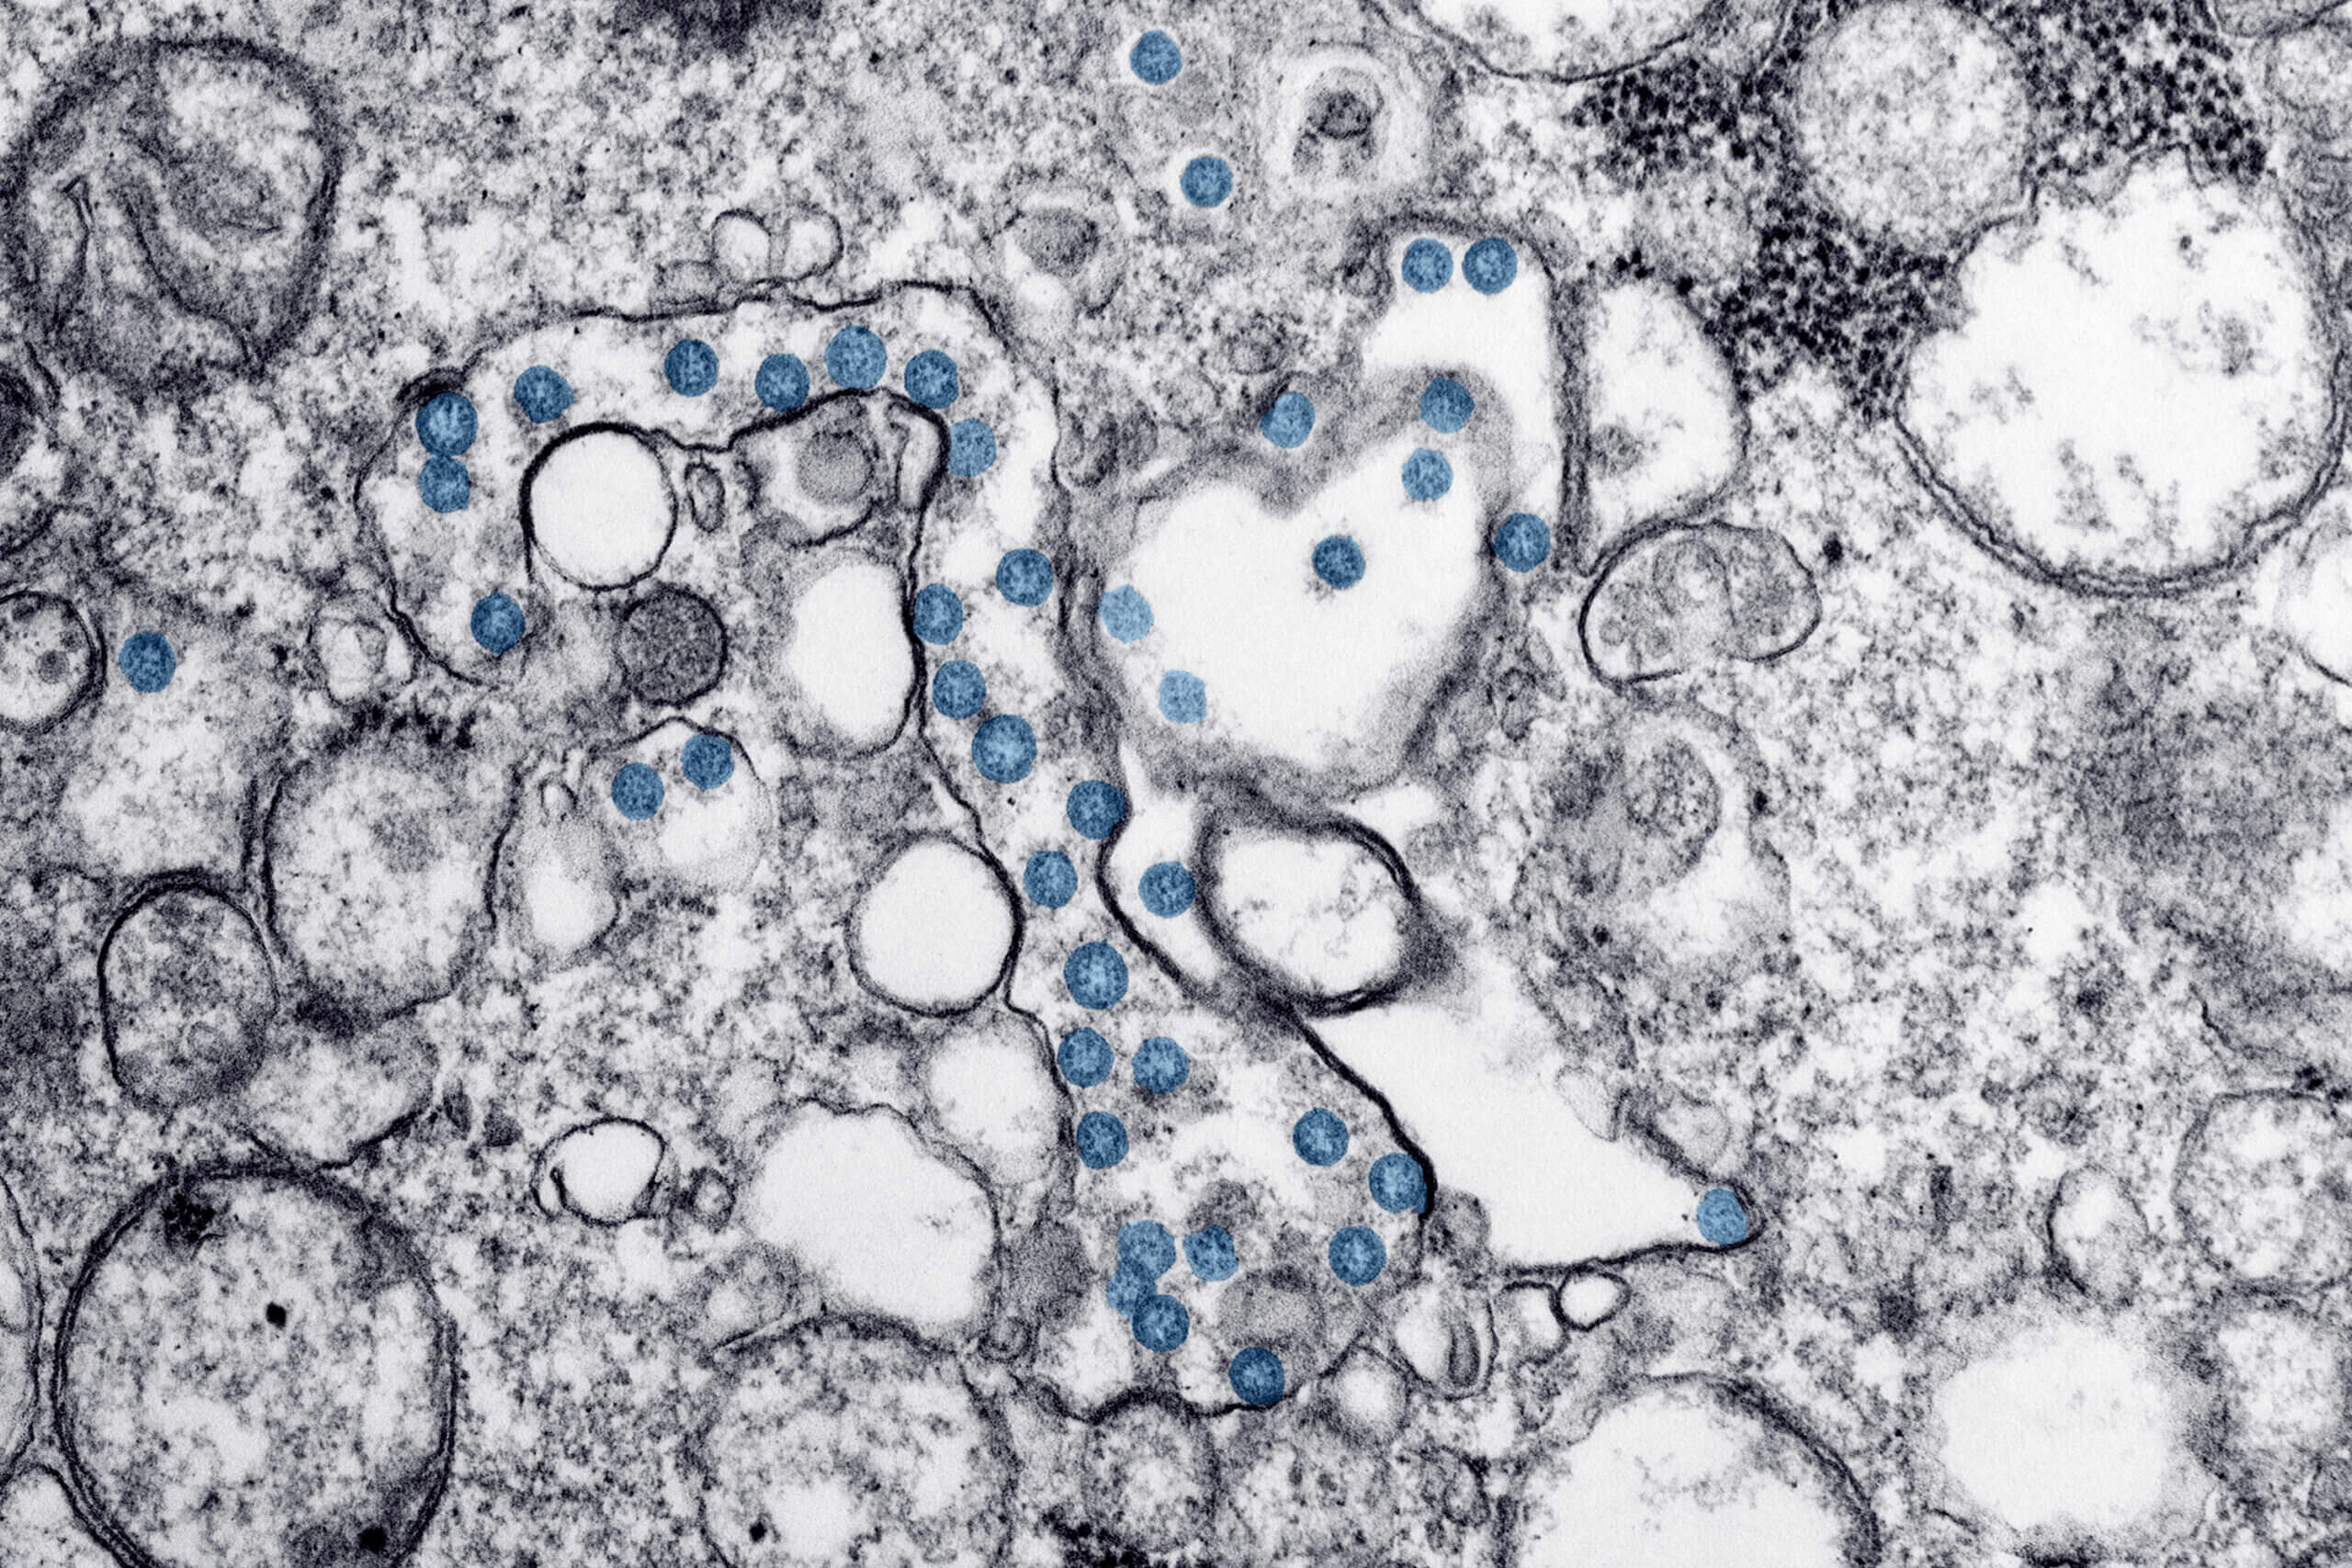 Delta variant remains major coronavirus threat